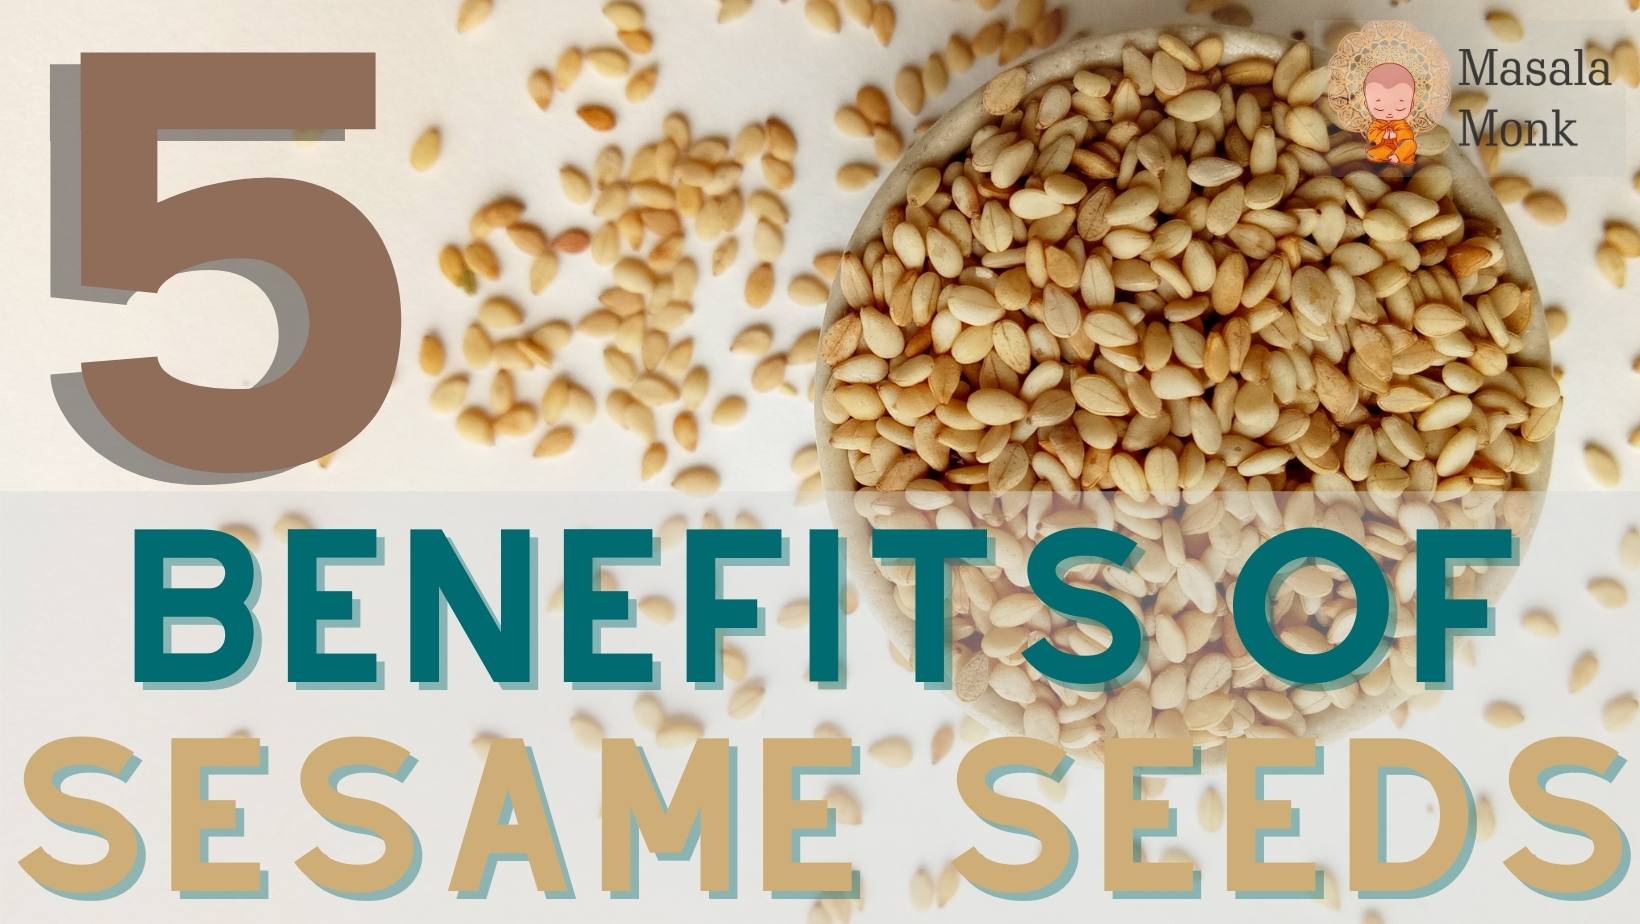 Top 5 Benefits of Sesame Seeds - Masala Monk Sesame seeds benefits